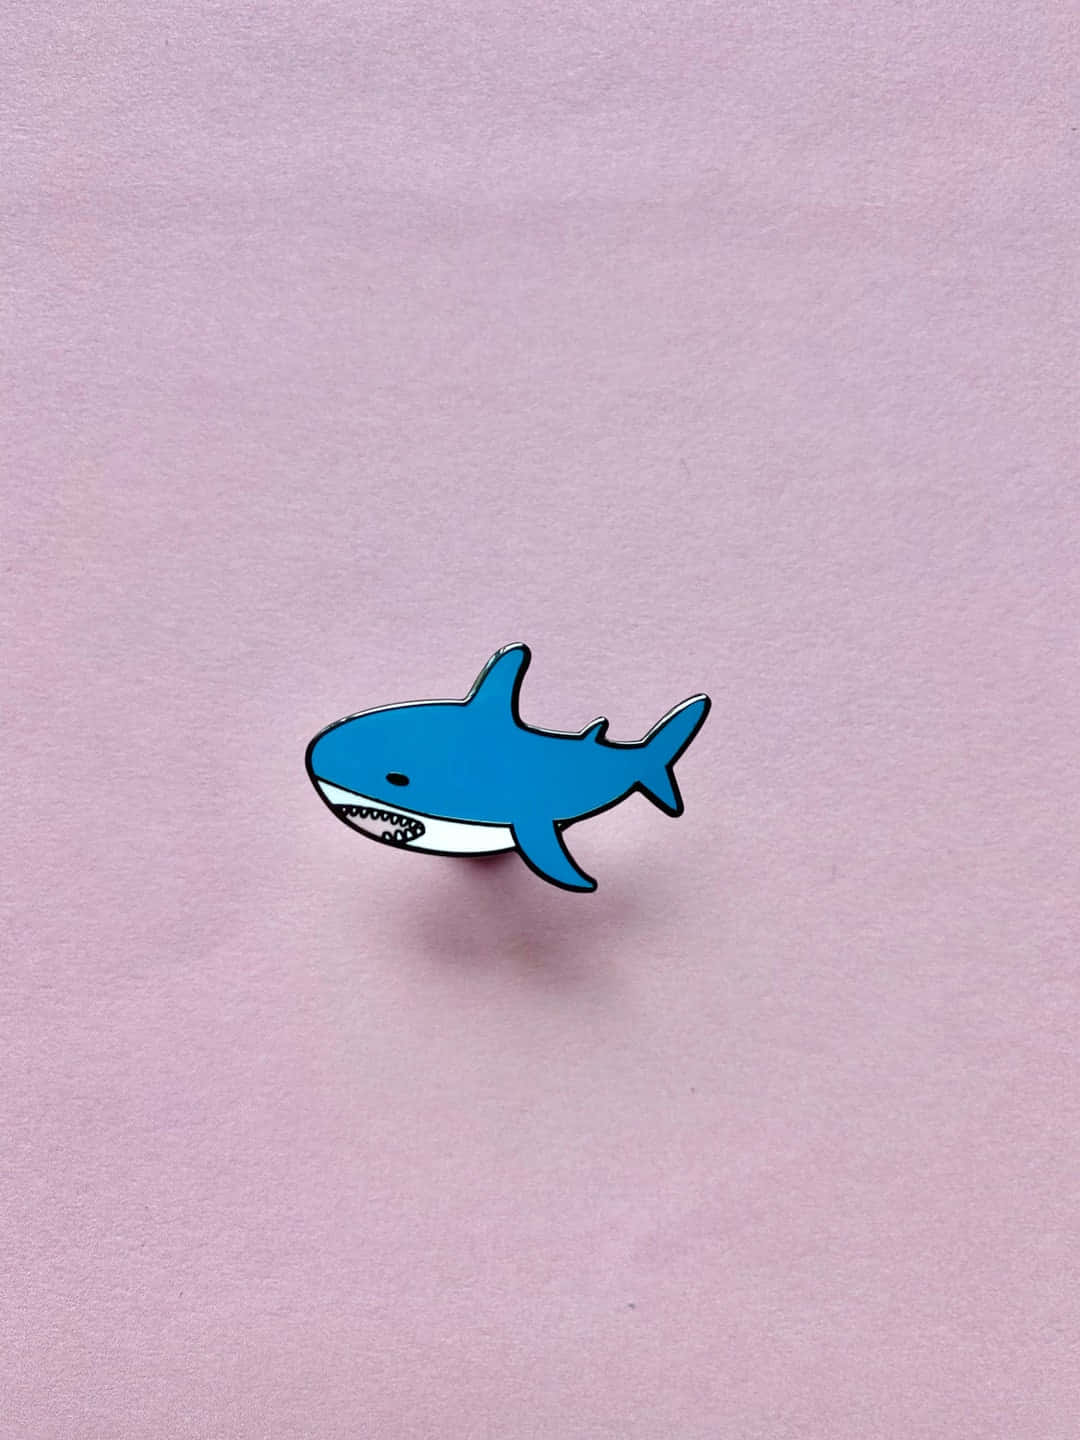 Blue Shark Pinon Pink Background Wallpaper